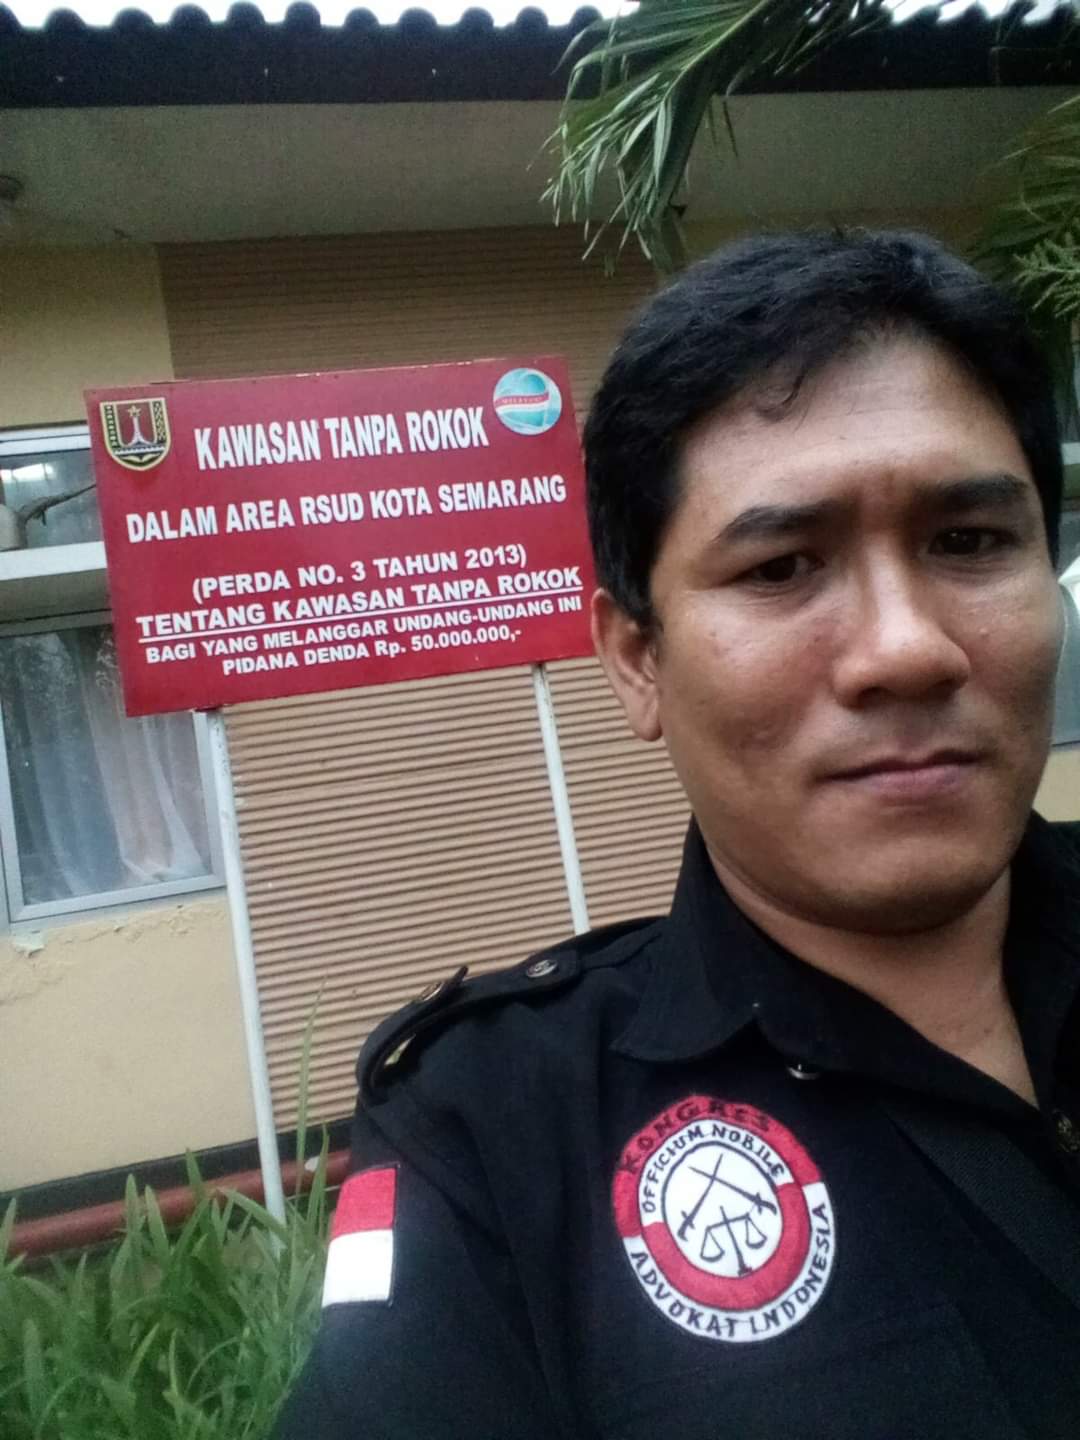 Pelaku KDRT di Bumi Panyileukan Bandung beriniasial BAP melakukan swafoto menggunakan atribut Kongres Advokat Indonesia (KAI).